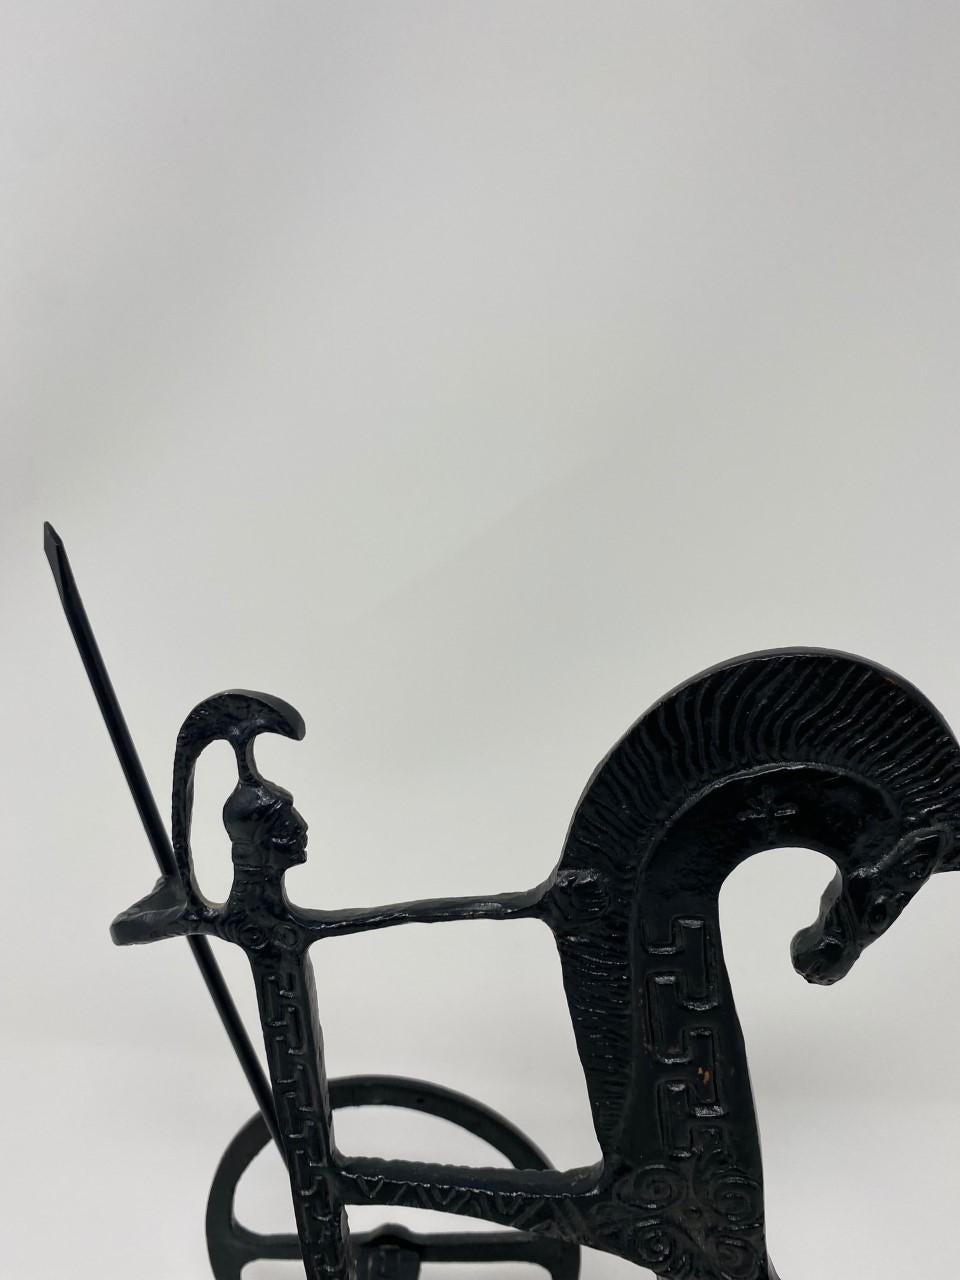 chariot symbolism